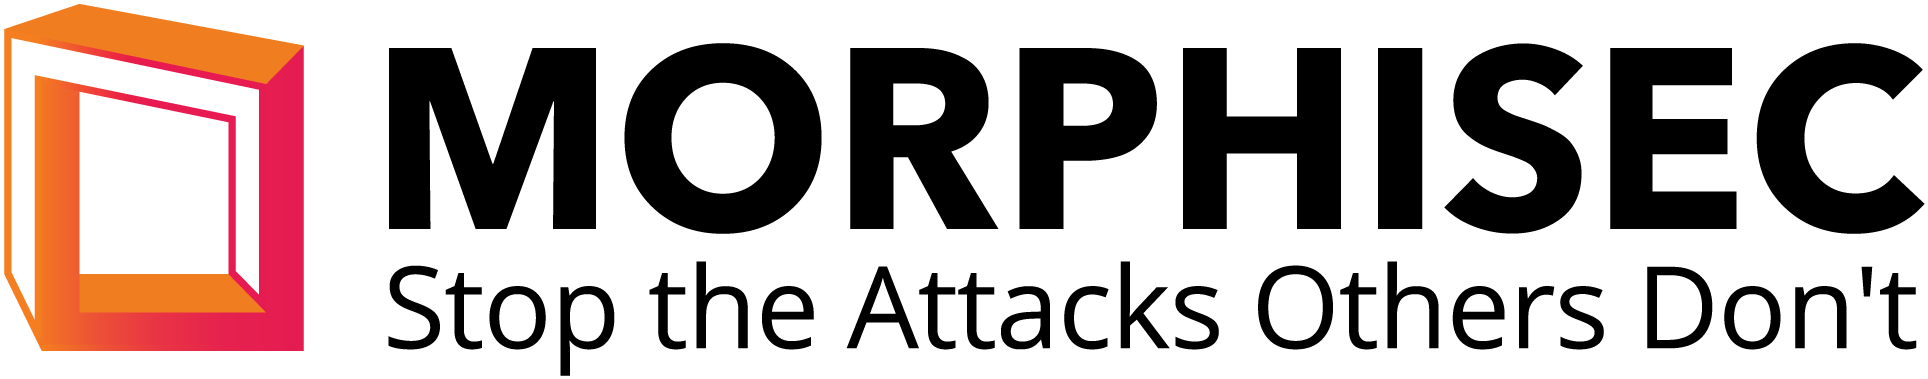 Morphisec-Logo-Horizontal_(RGB_-_Color_Black).png